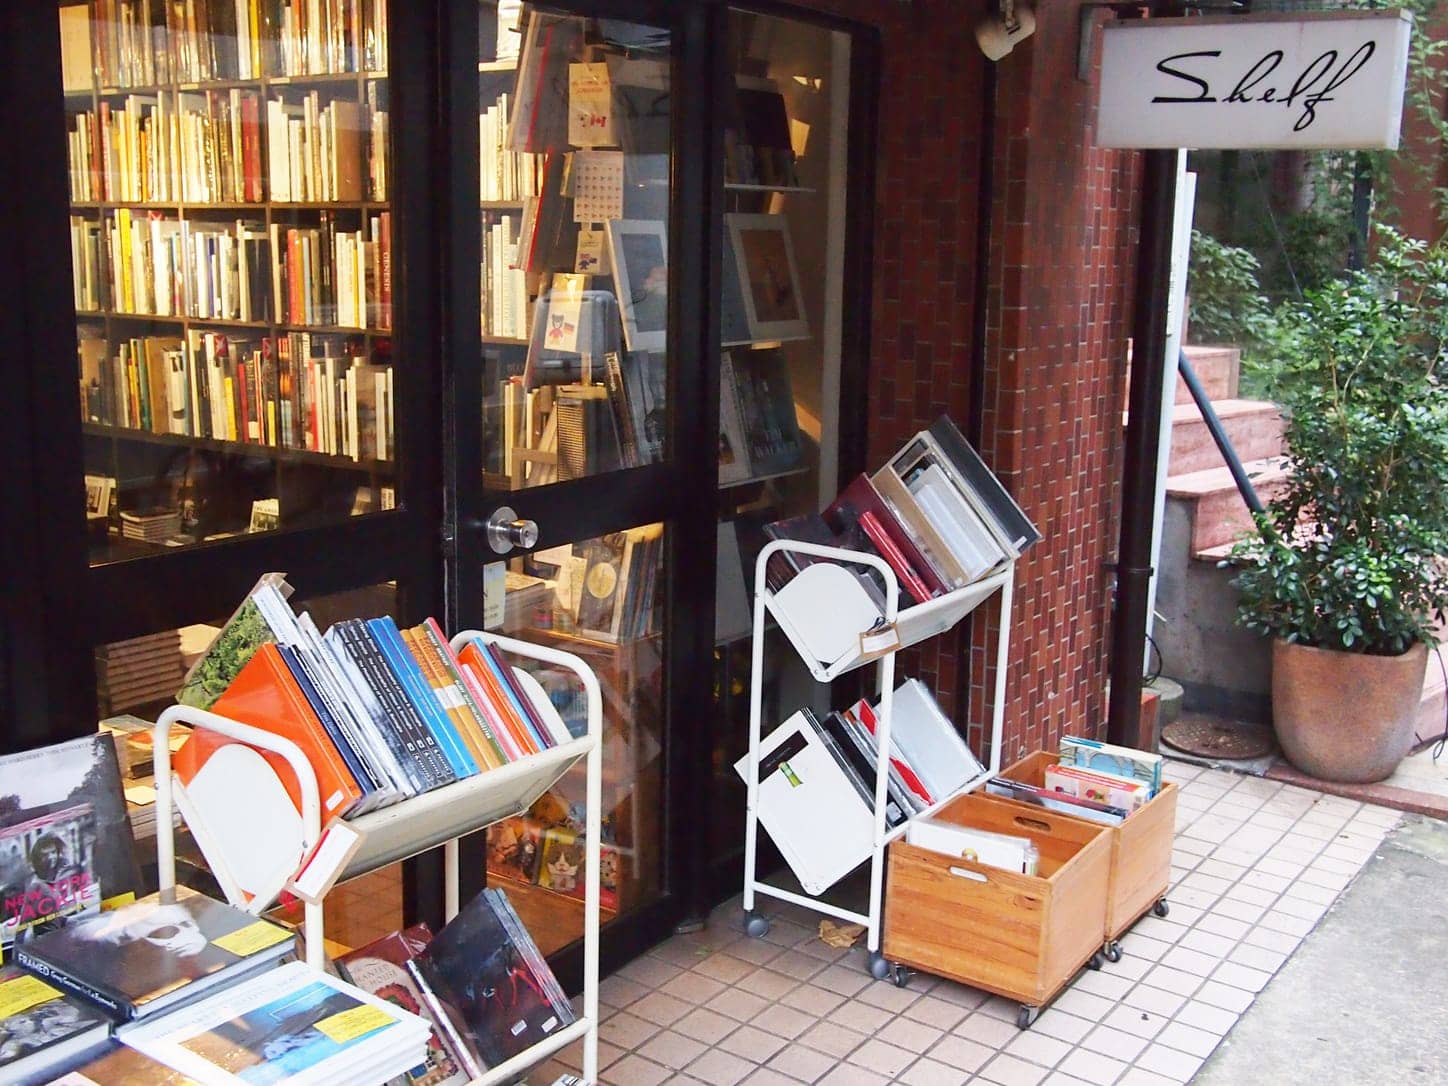 Shelf bookshop